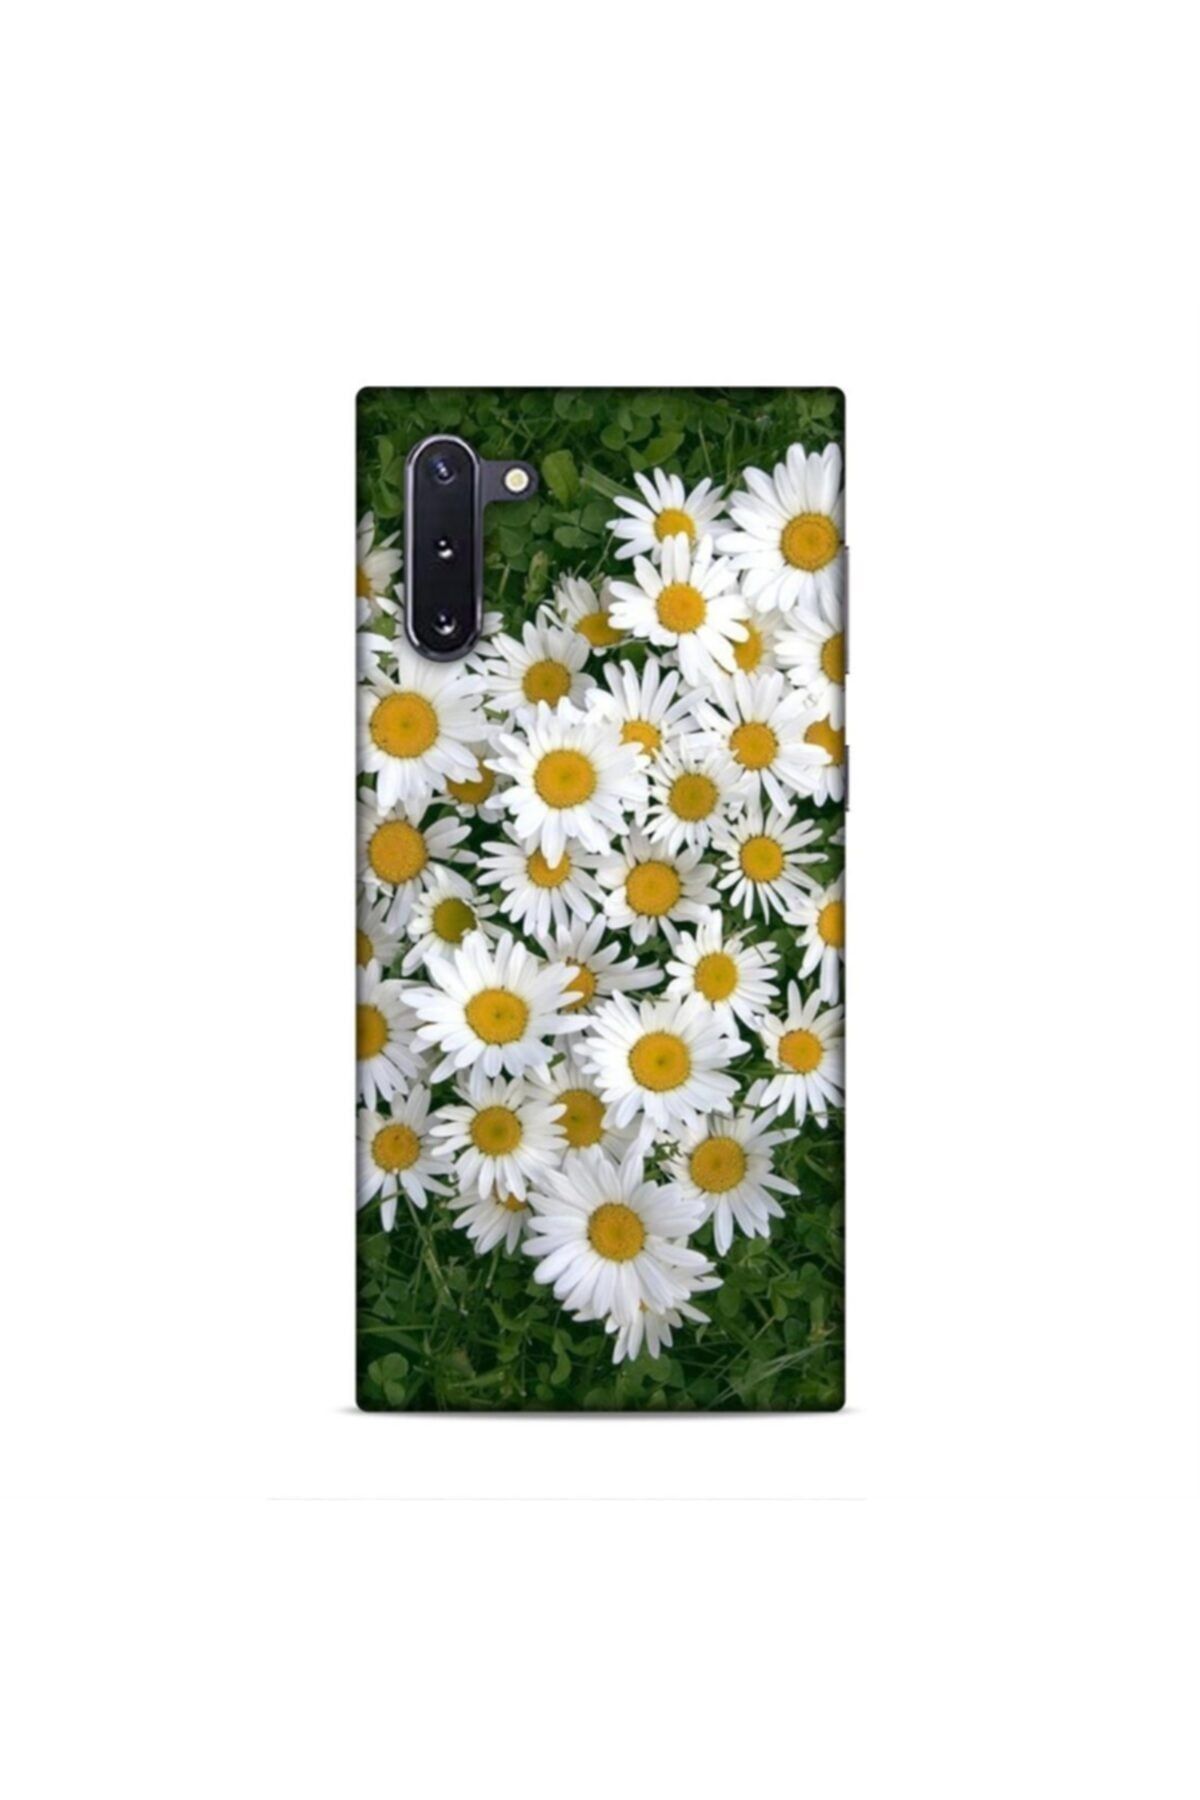 Pickcase Samsung Galaxy Note 10 Kılıf Desenli Arka Kapak Kalpli Papatya